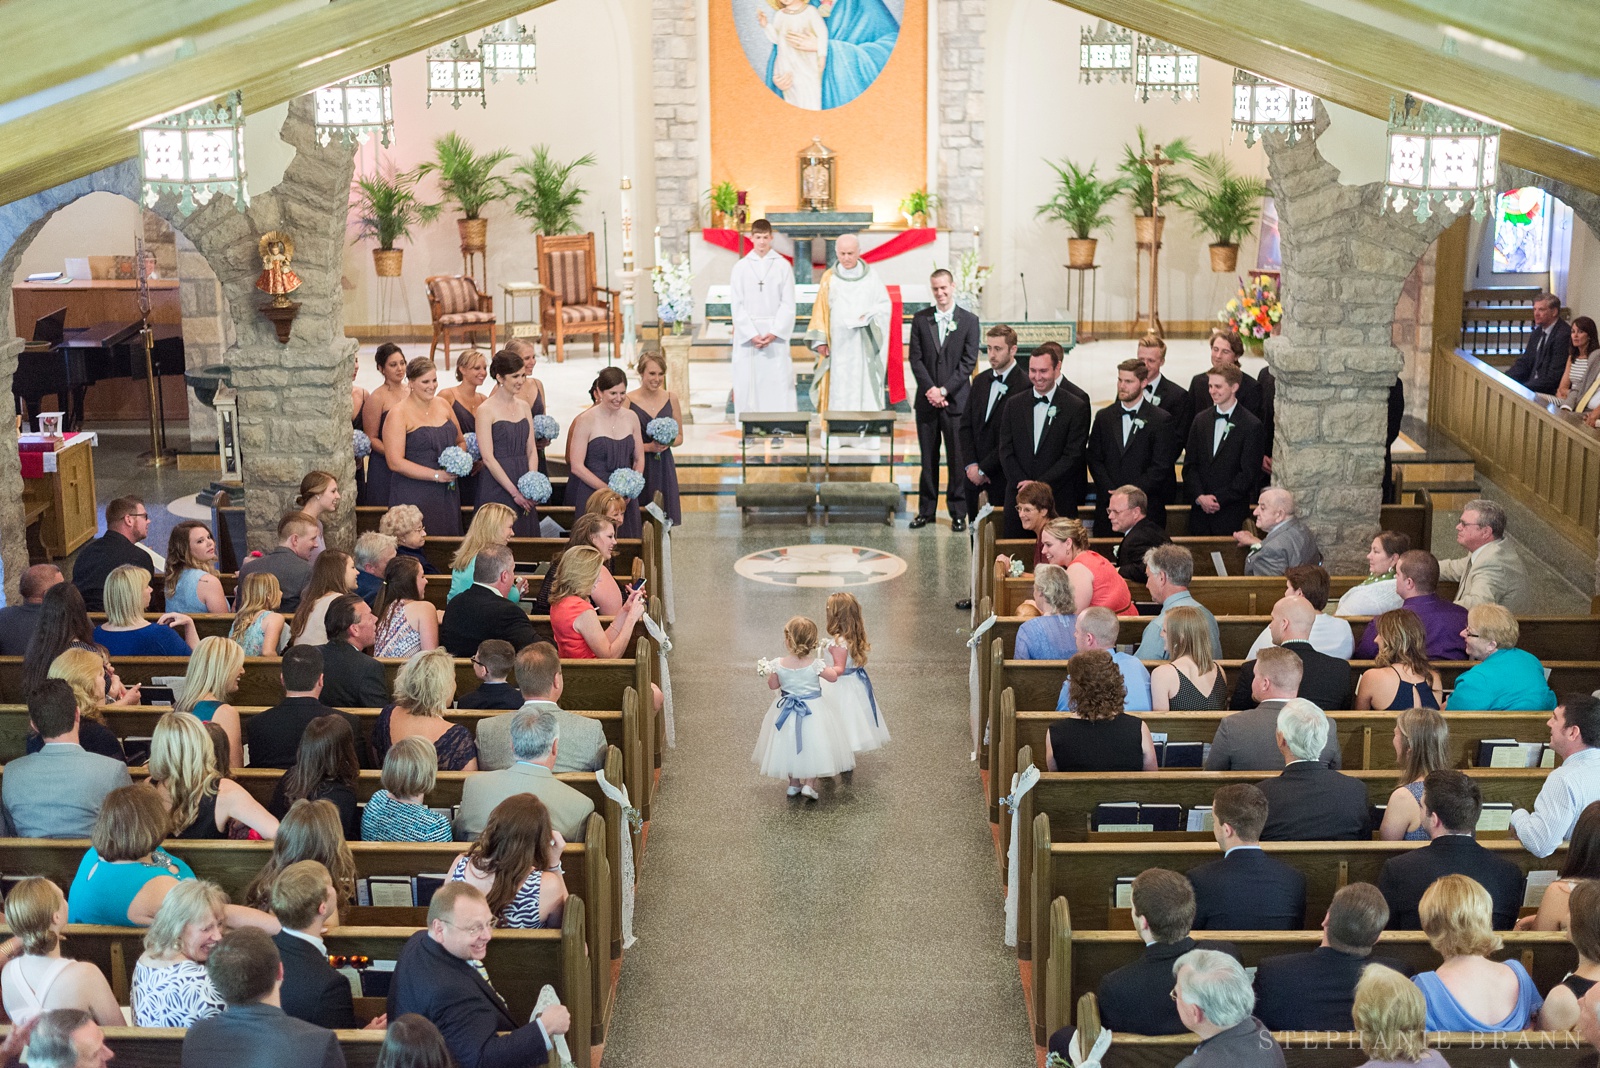 girls-walking-down-the-aisle-before-a-wedding-at-a-catholic-church